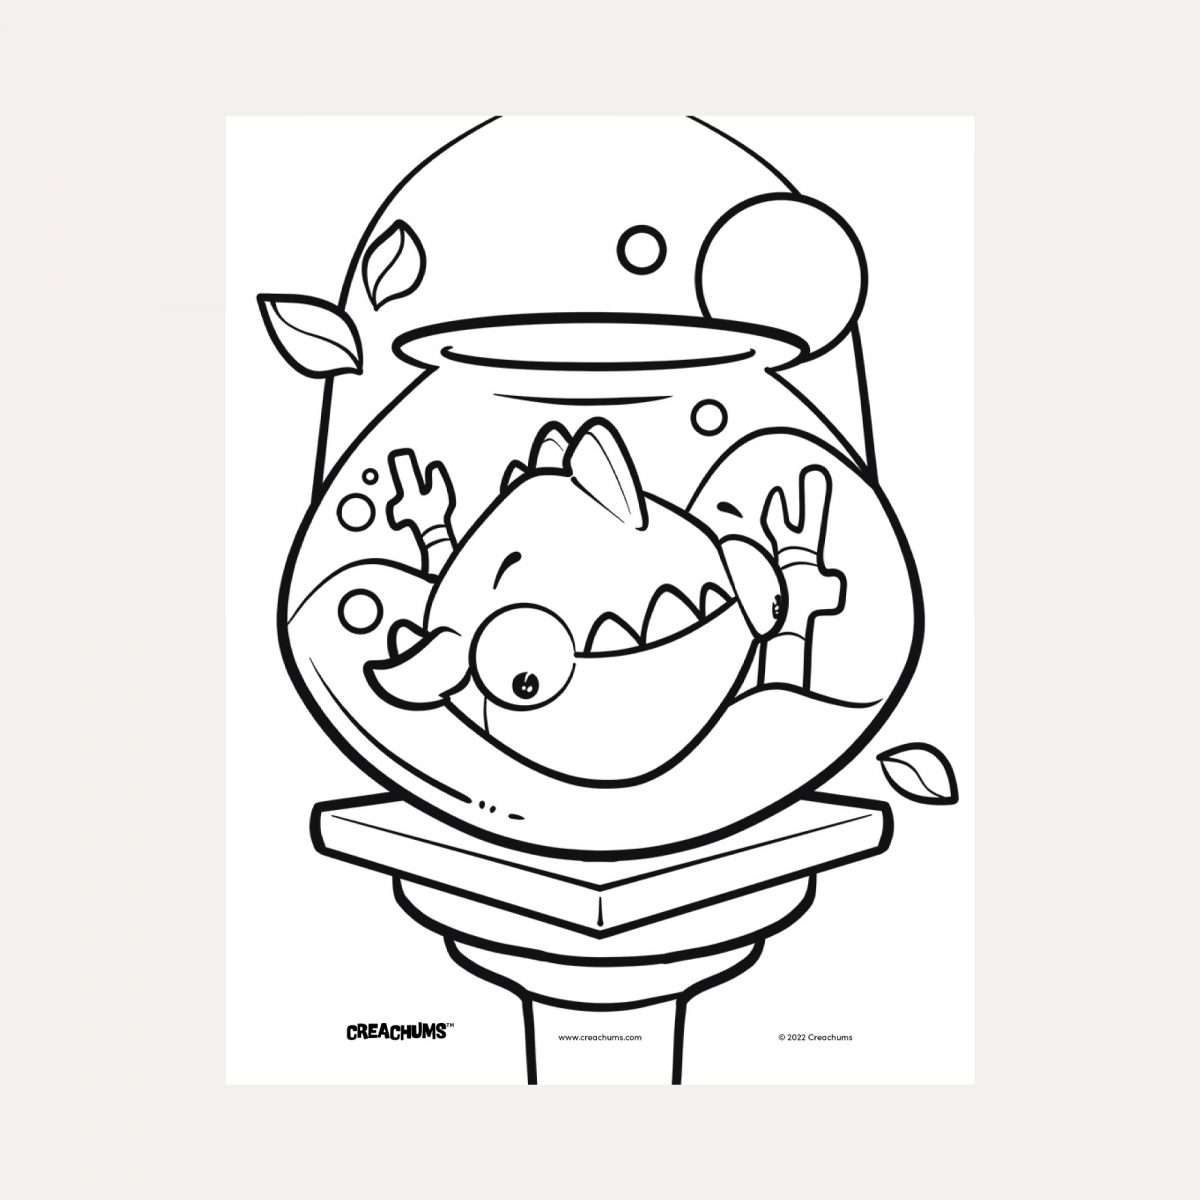 Creachums Spug Fish Bowl Coloring Page